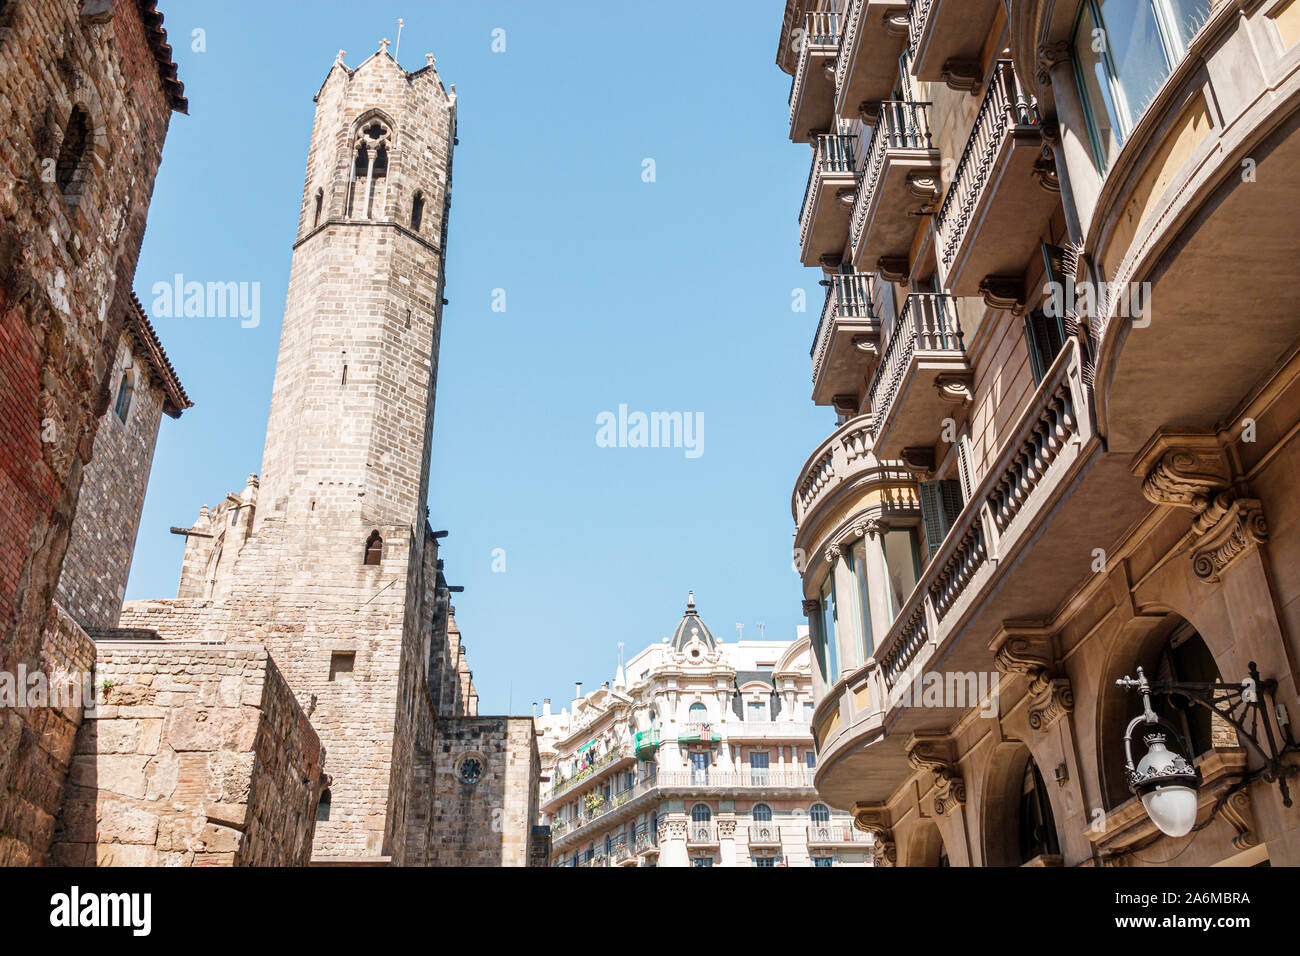 Barcelona Spain,Catalonia Ciutat Vella,historic center,Chapel of Santa Agata,Royal Chapel,octagonal bell tower,Gothic architecture,1302,building,balco Stock Photo